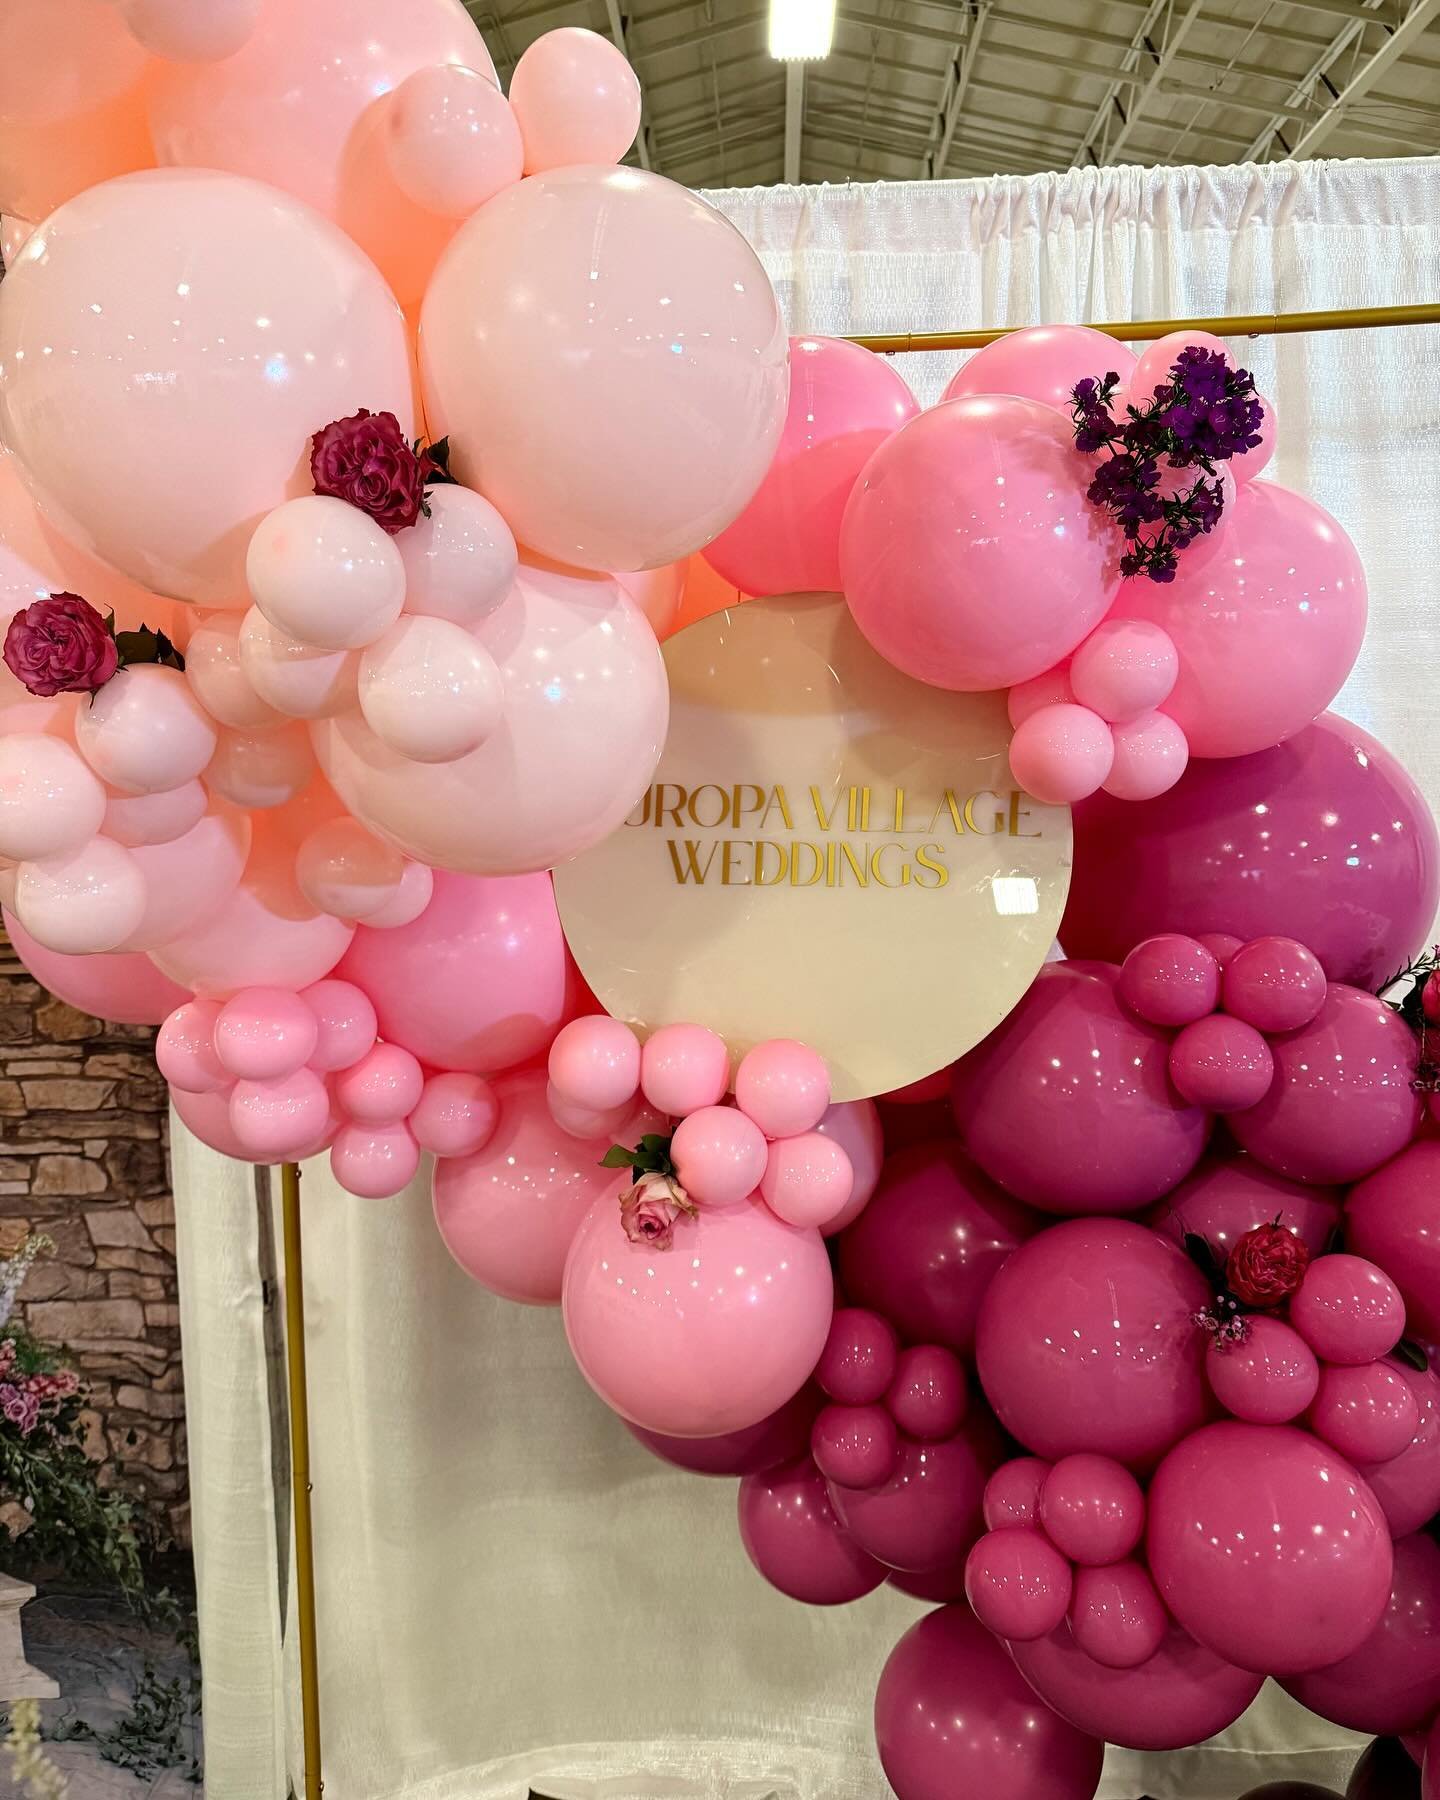 Still dreaming of these pink balloons 😍💕

#bashdrop #sandiegobridalbazaar #weddingballoons #balloongarland #organicballoongarland #balloonstyling #tuftexballoons #pinkballoons #balloondecoration #balloonsgalore #balloonart #balloonstylist